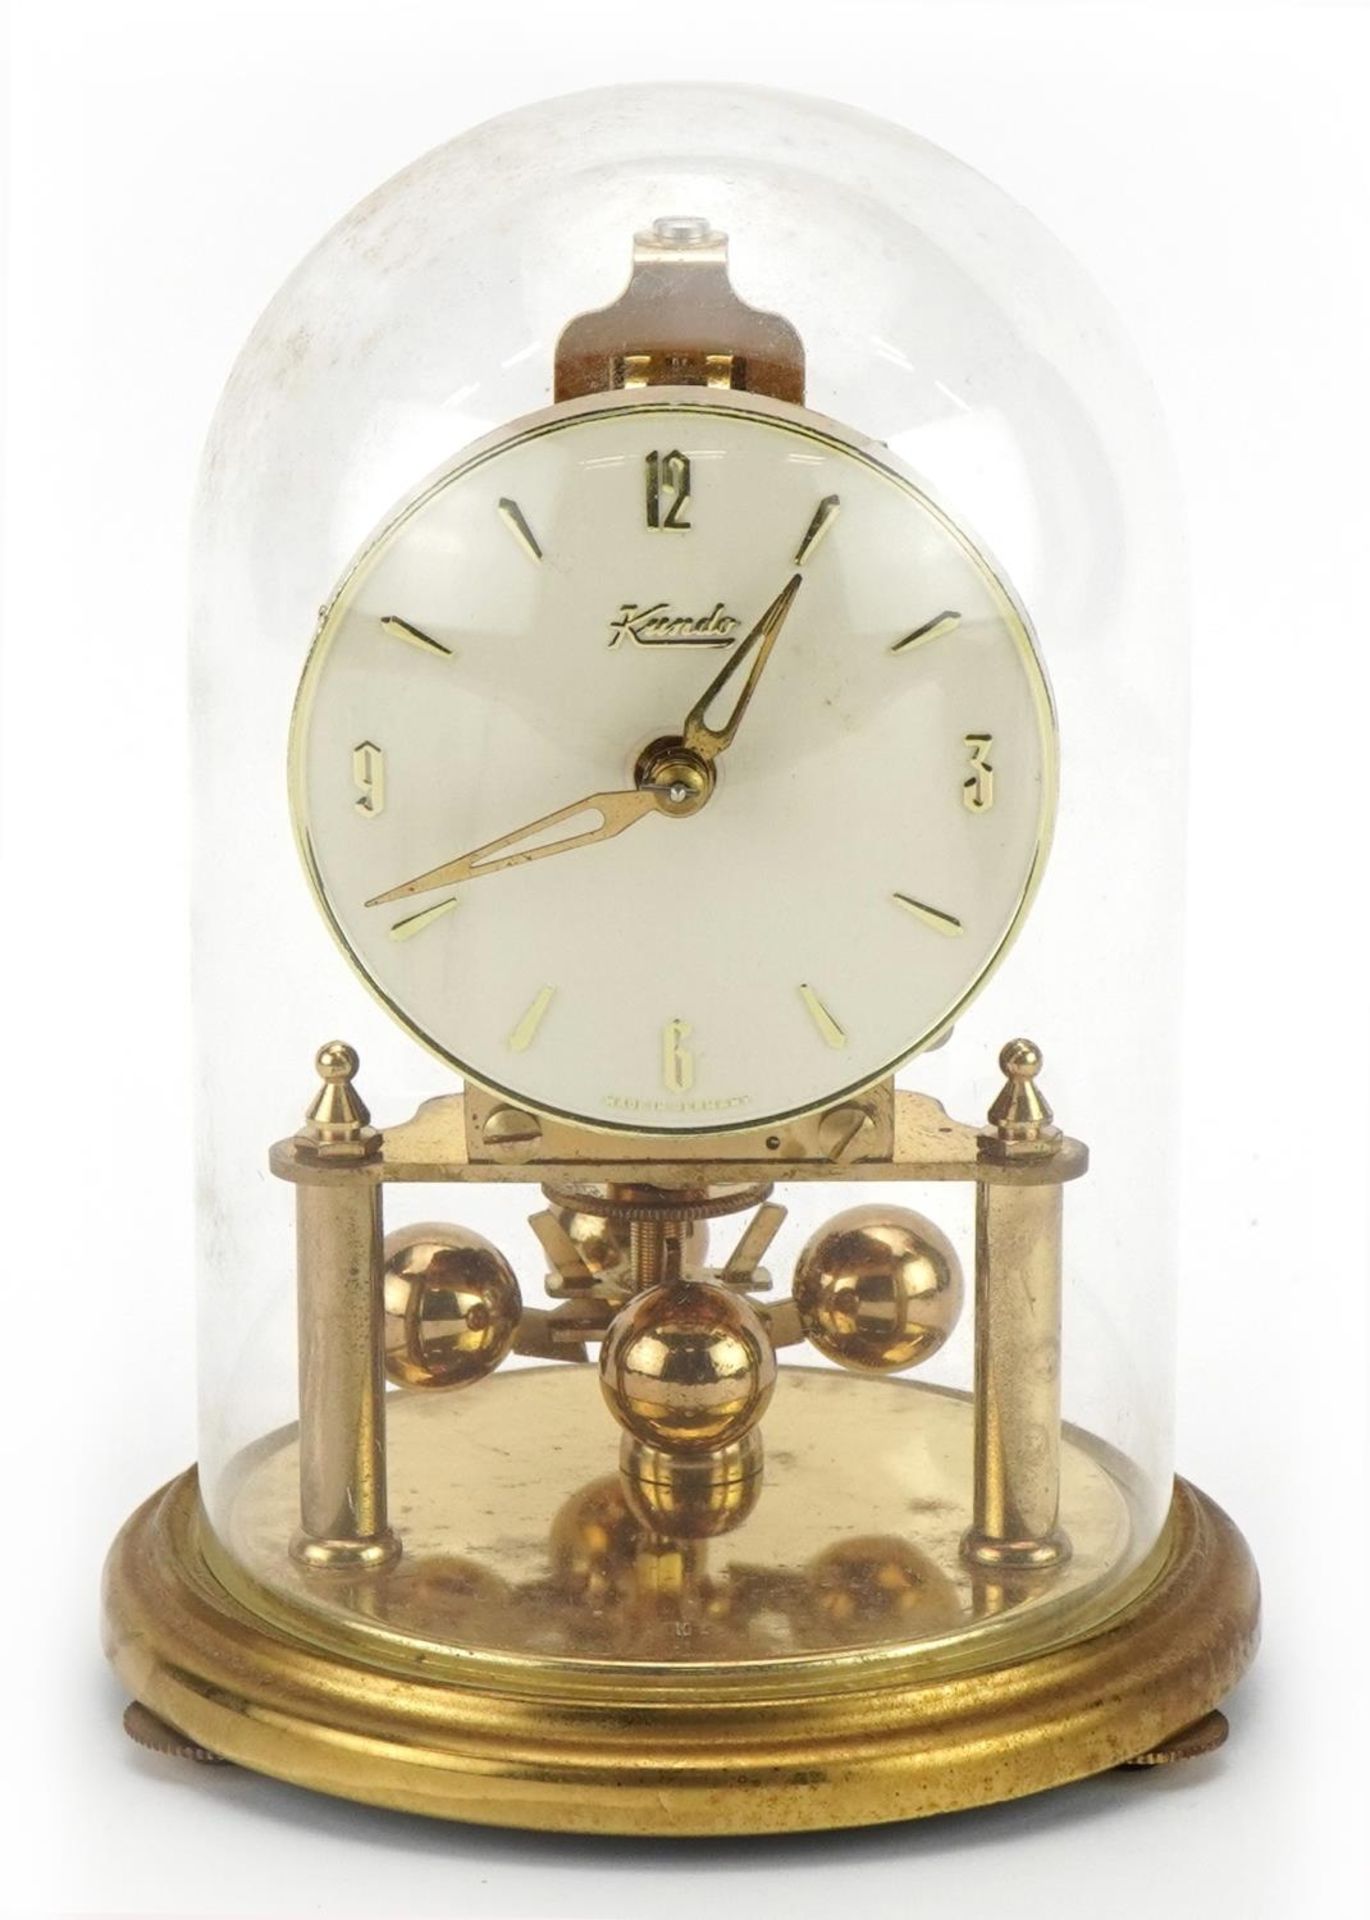 Kendo brass anniversary clock under a glass dome, 18cm high